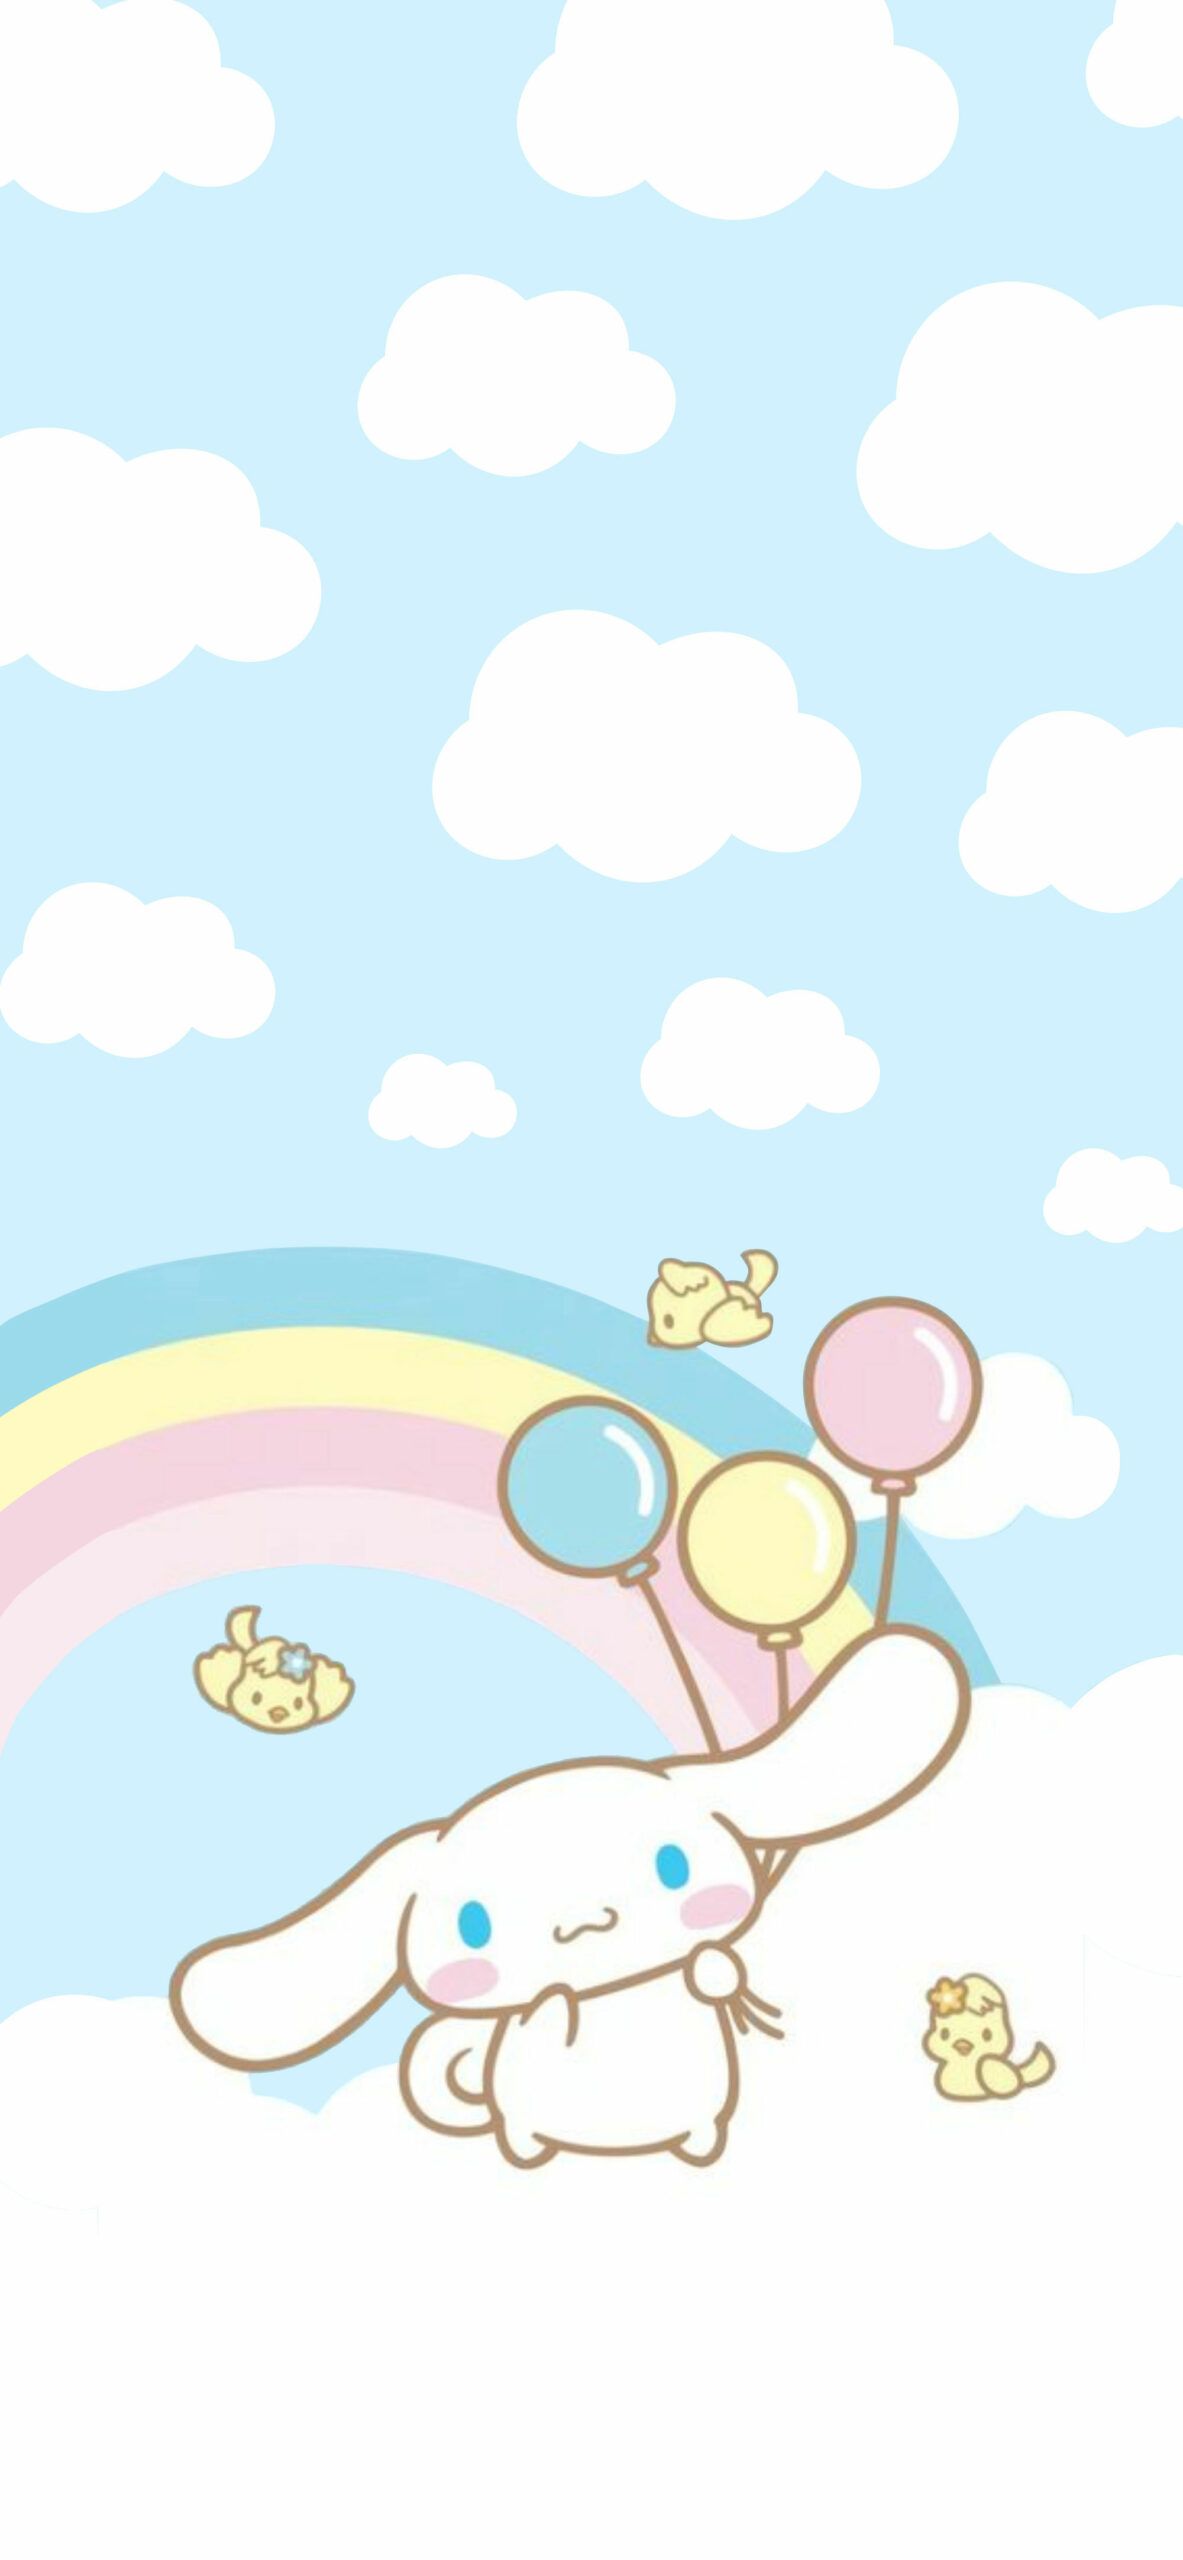 A cute little white rabbit with balloons - Sanrio, Cinnamoroll